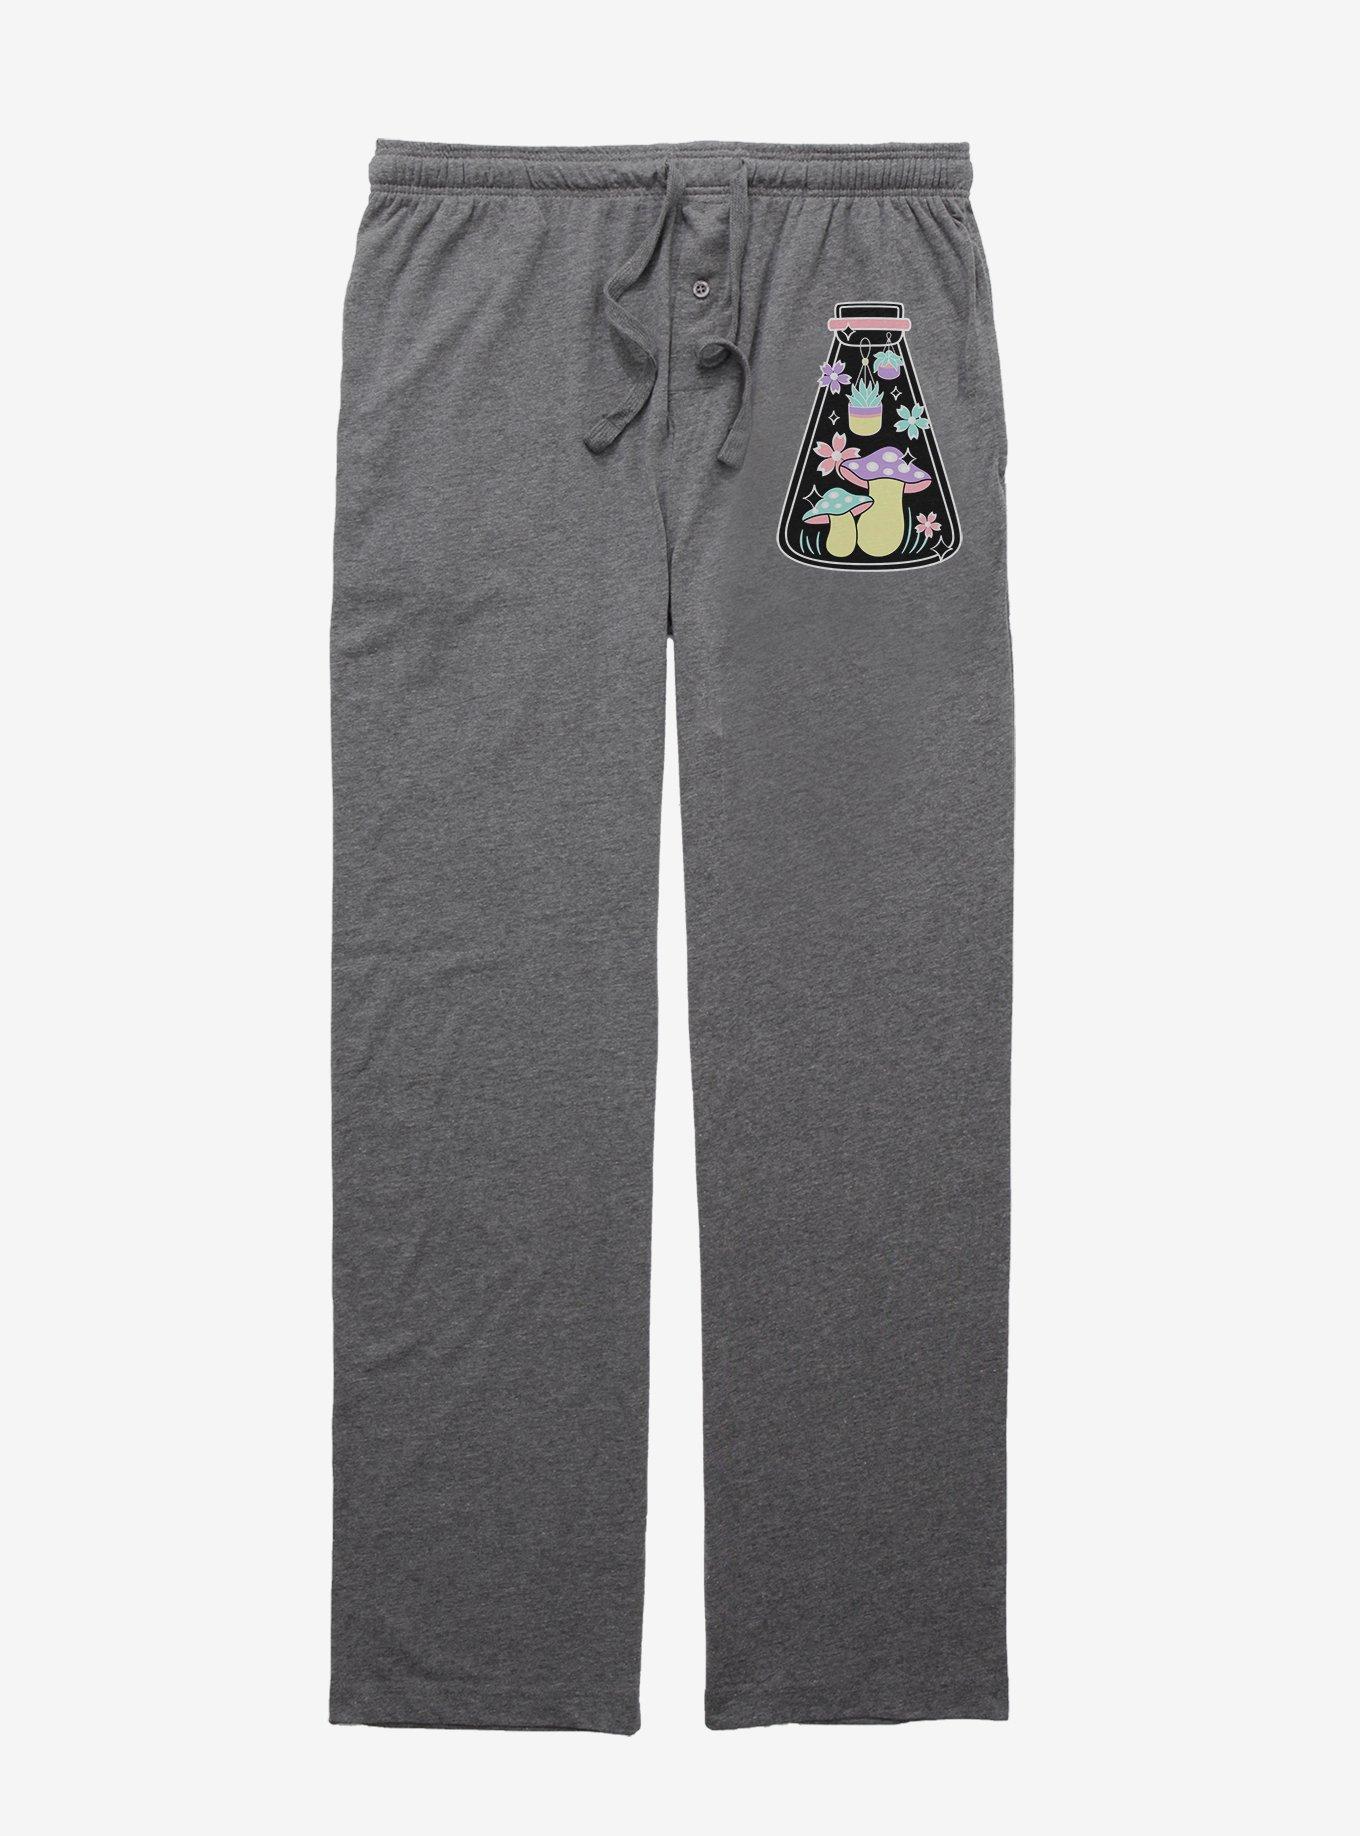 Groovy Erlenmeyer Pajama Pants, GRAPHITE HEATHER, hi-res